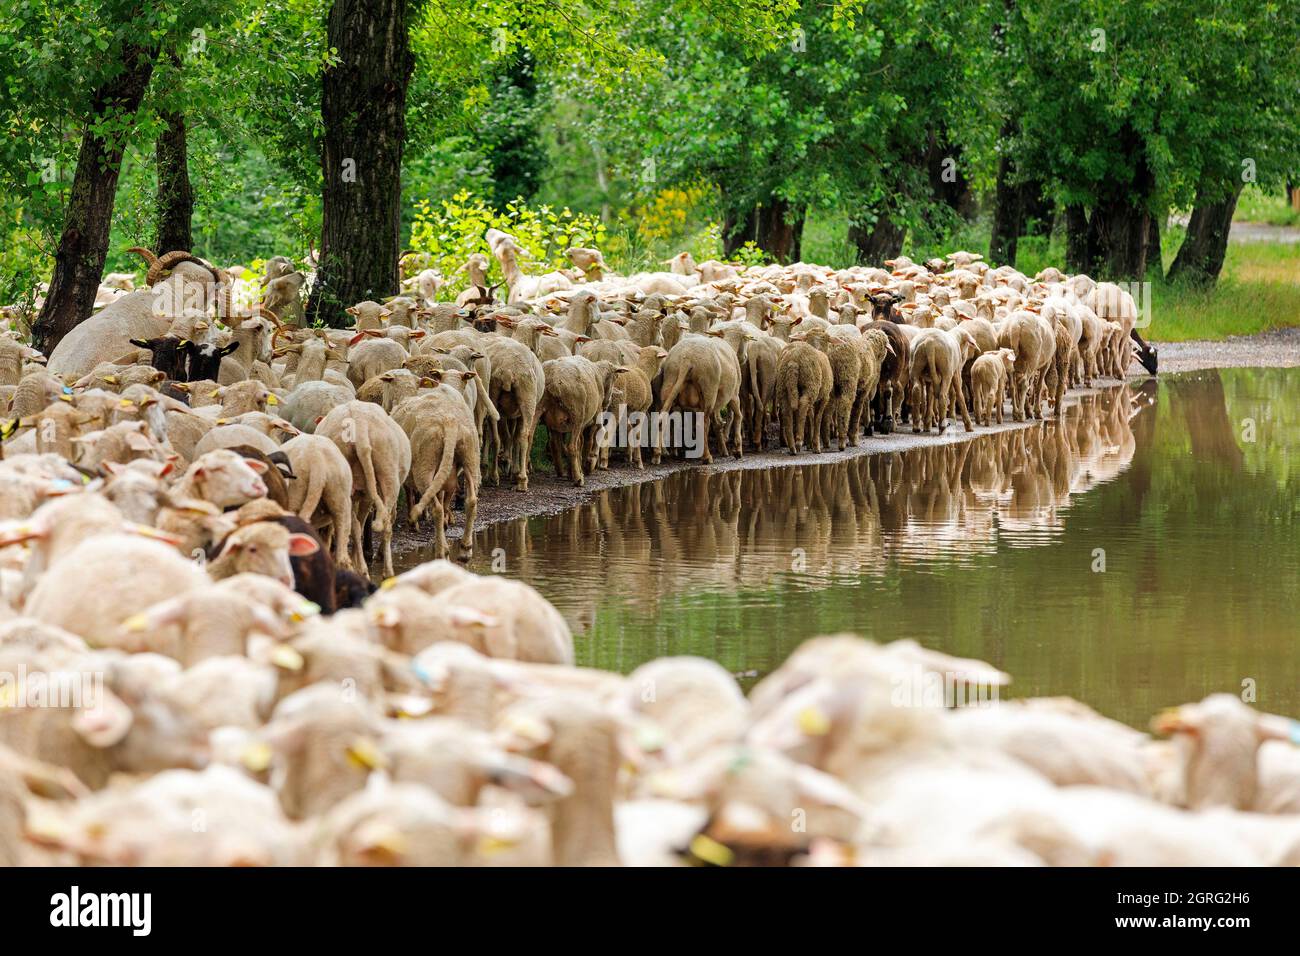 France, Var, Roquebrune sur Argens, Arena lake with the Argens river, flock of sheep Stock Photo